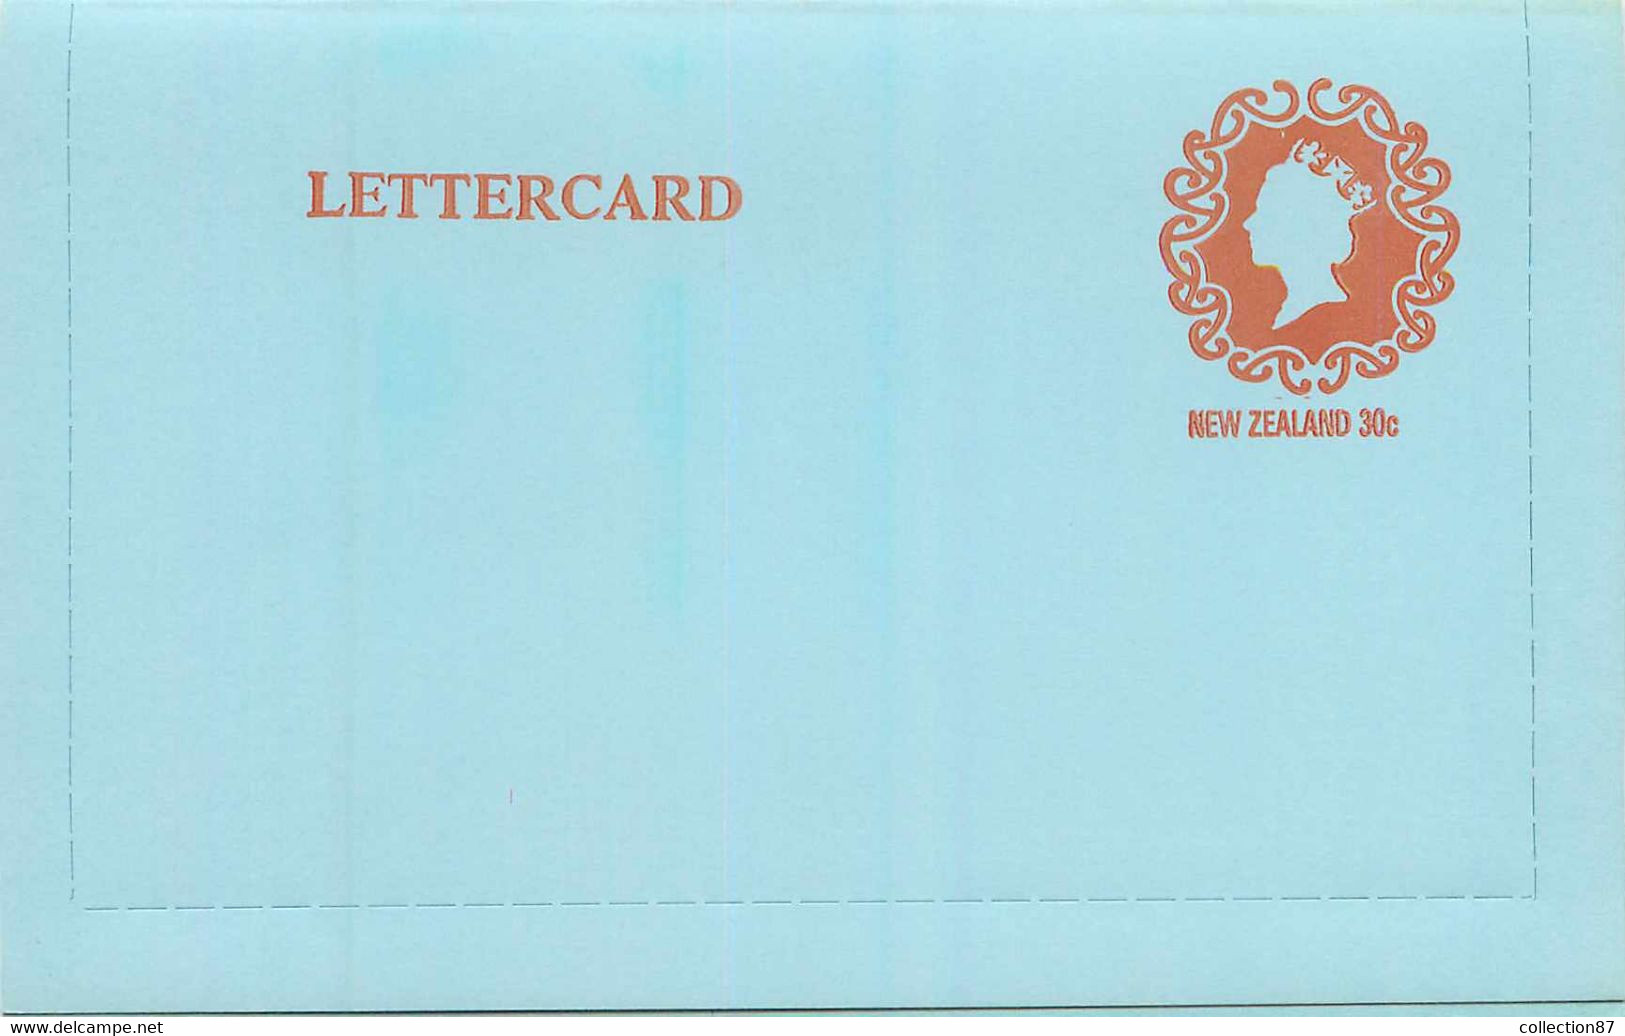 NEW ZEALAND - LETTERCARD 30c Postage Paid < ENTIER POSTAL NOUVELLE ZELANDE 30 Cent - QUEEN ELISABETH - Enteros Postales